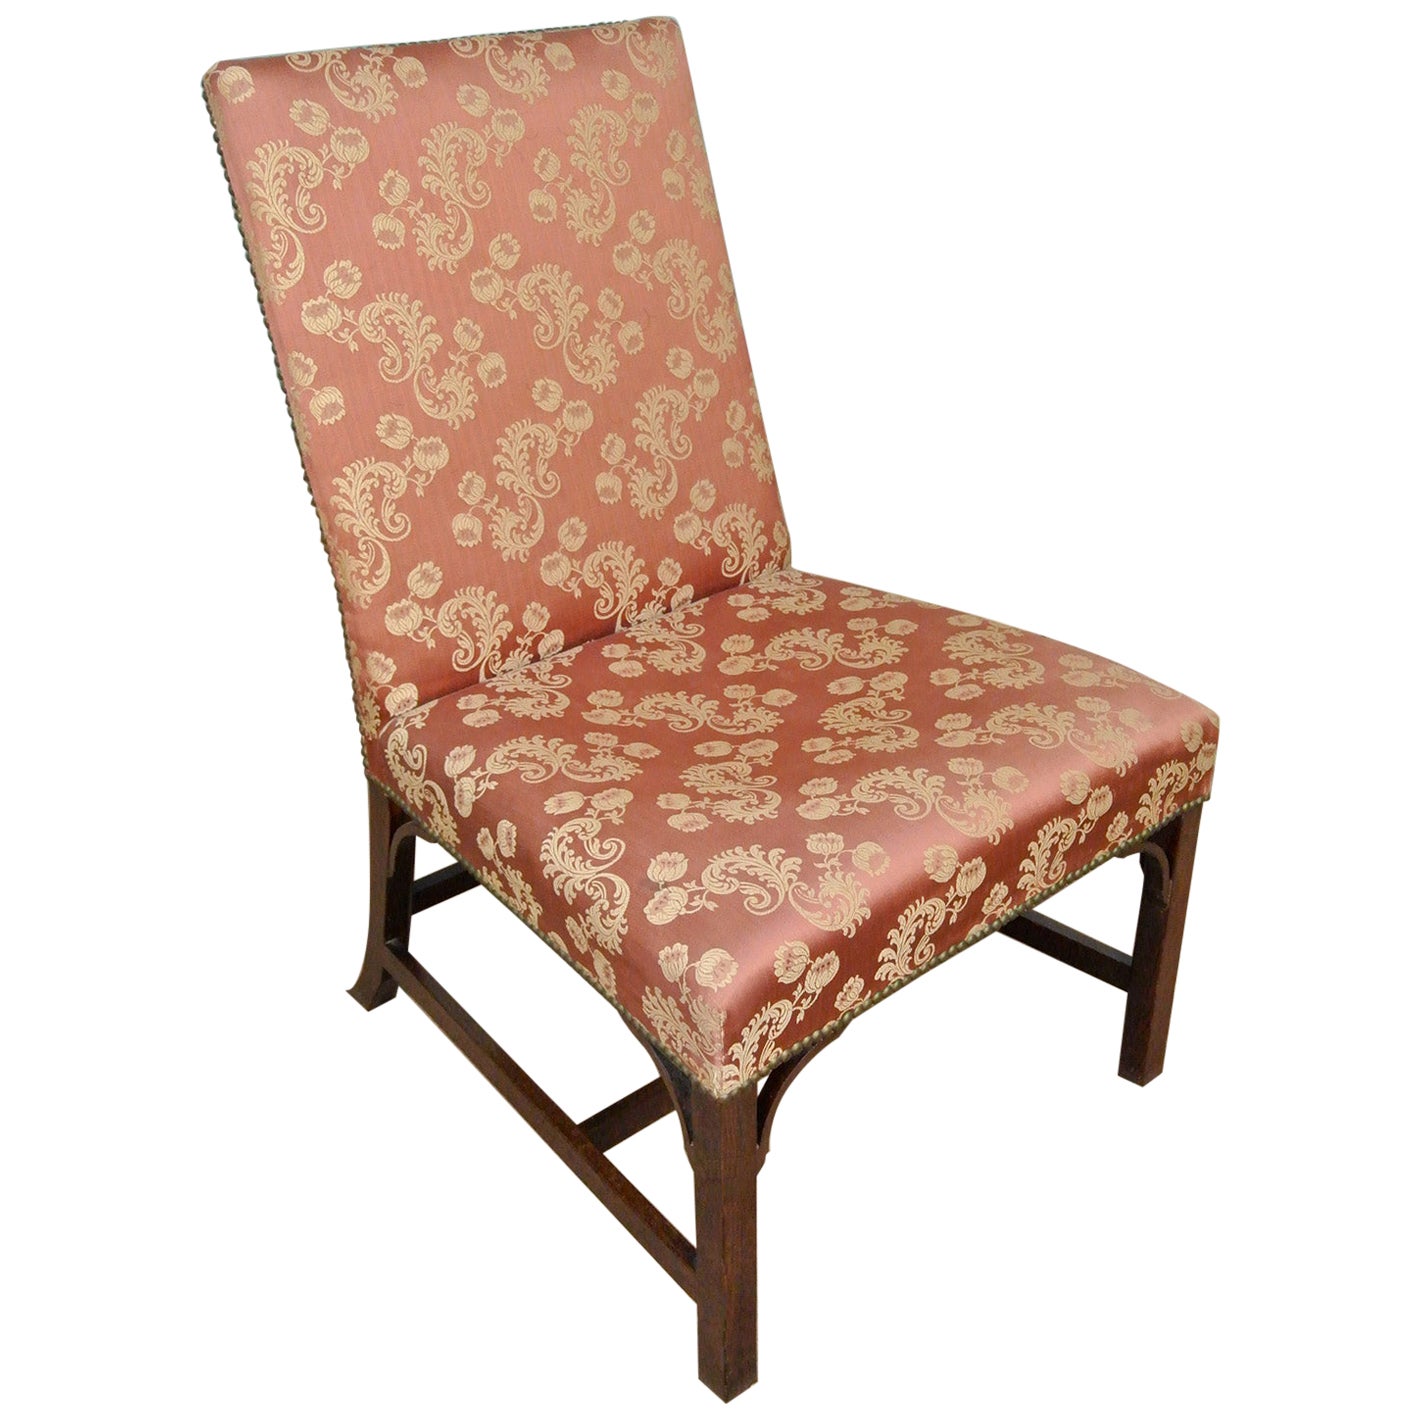 Rare and Fine British Colonial Georgian Teak Side Chair c. 1790